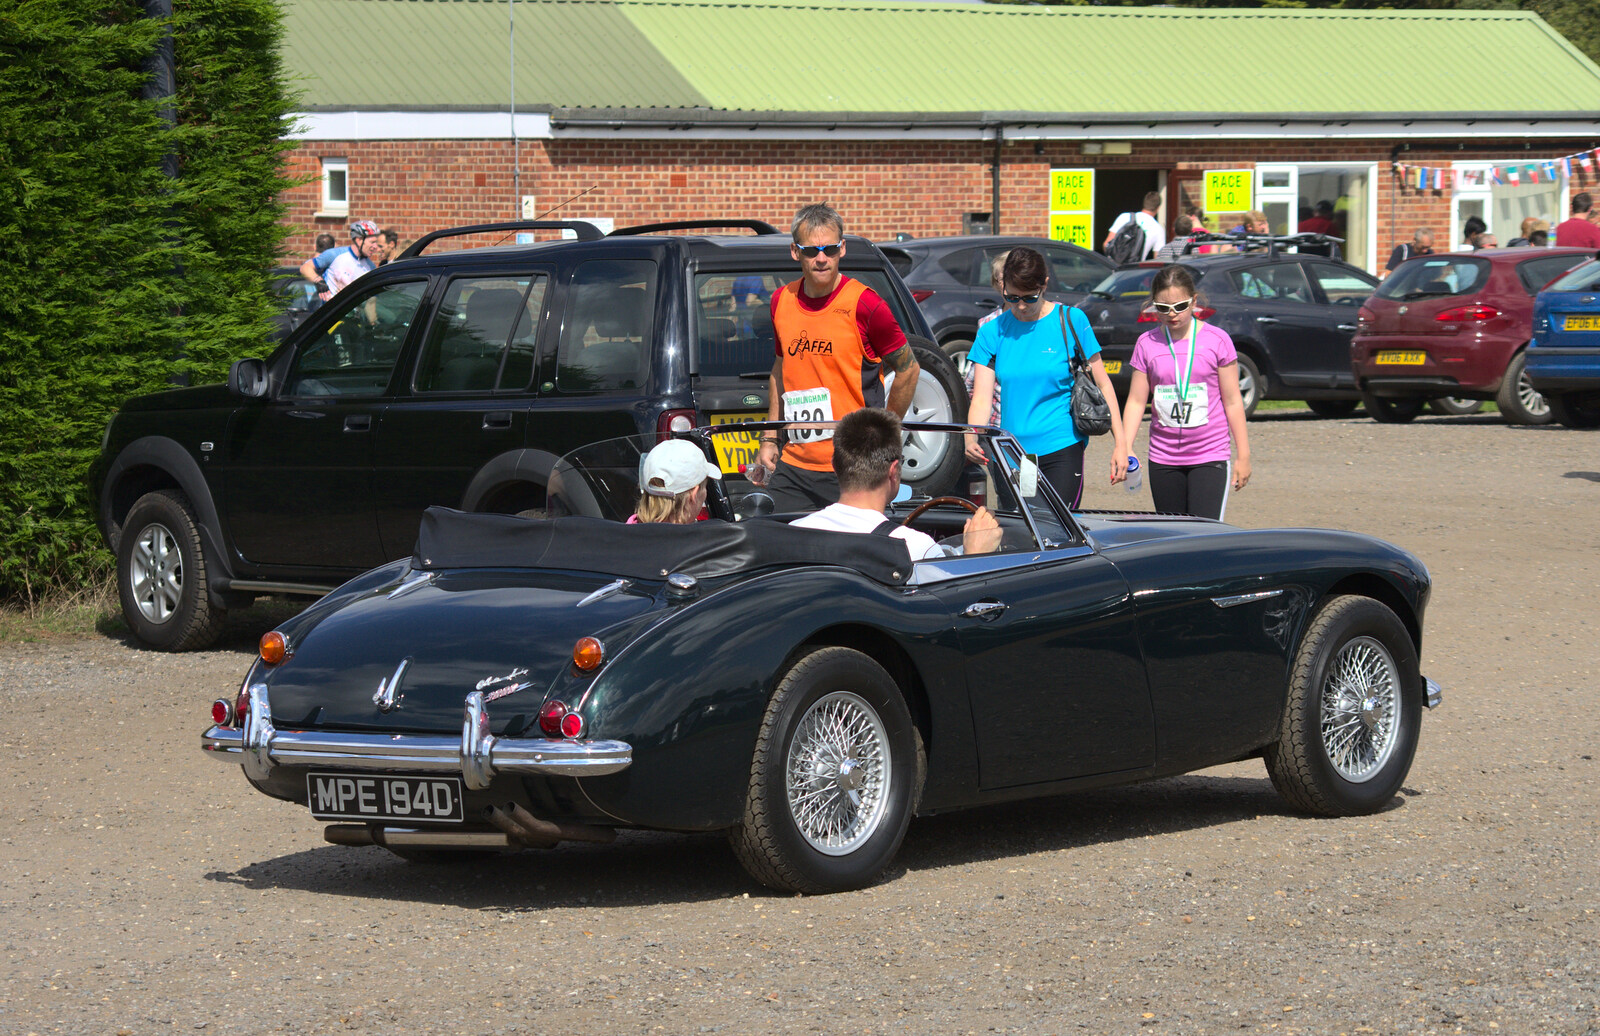 Austin-Healey 3000 in the car park from The Framlingham 10k Run, Suffolk - 31st August 2014